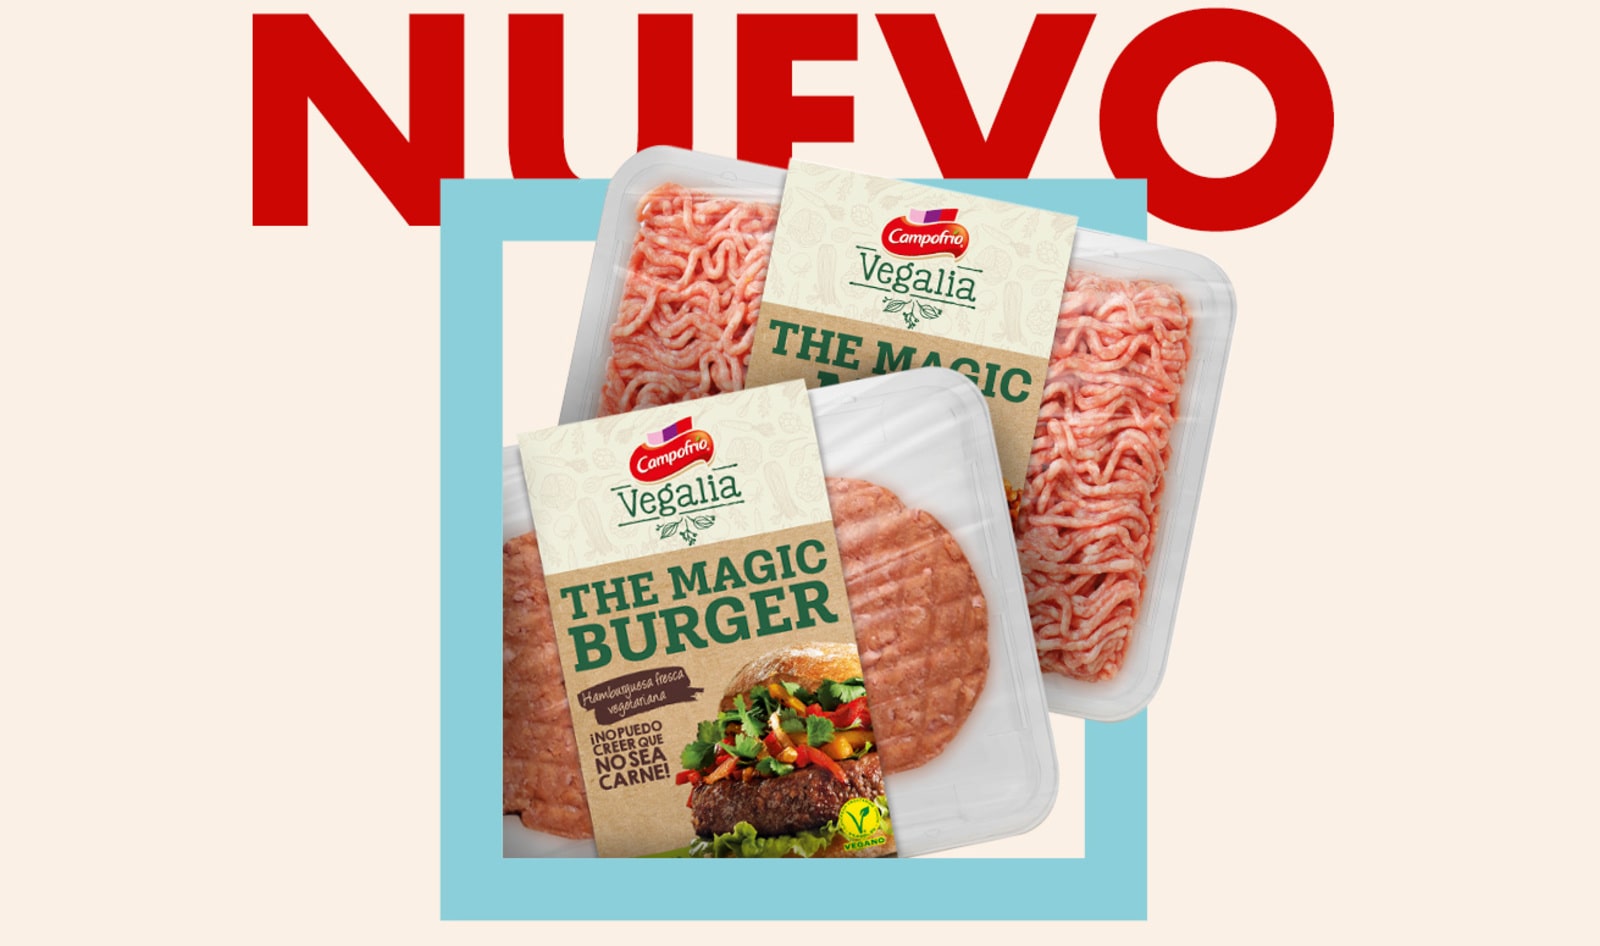 Spanish Pork Giant Launches “Magic” Vegan Burgers